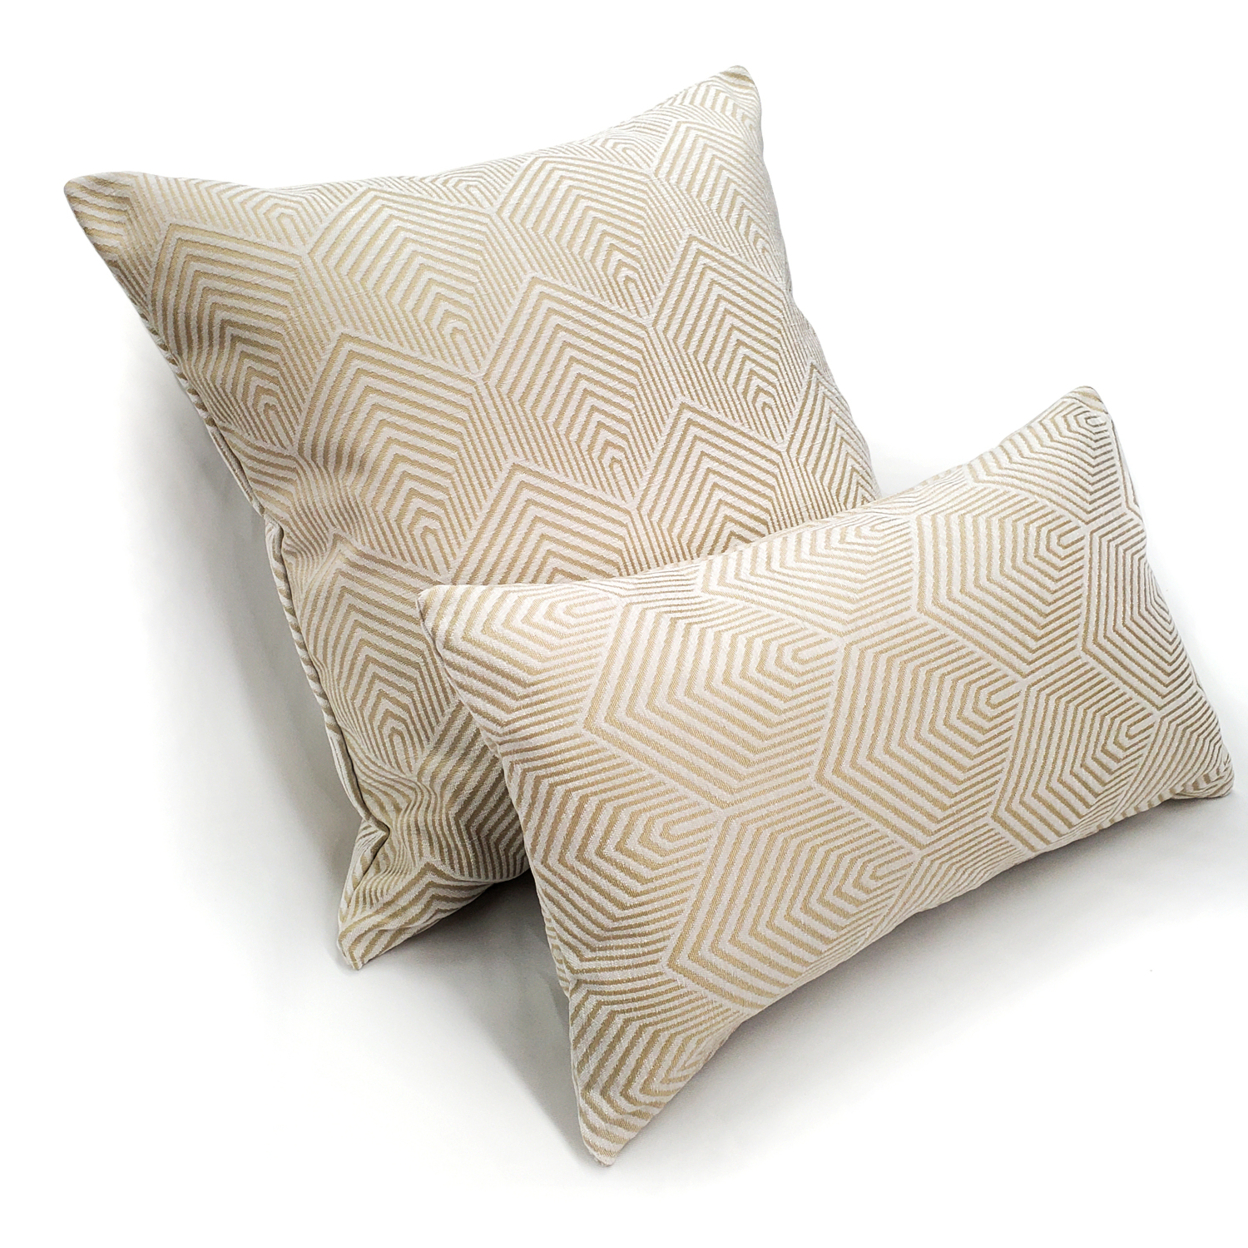 Sahara Cream And Gold Textured Throw Pillow 12x20, With Polyfill Insert